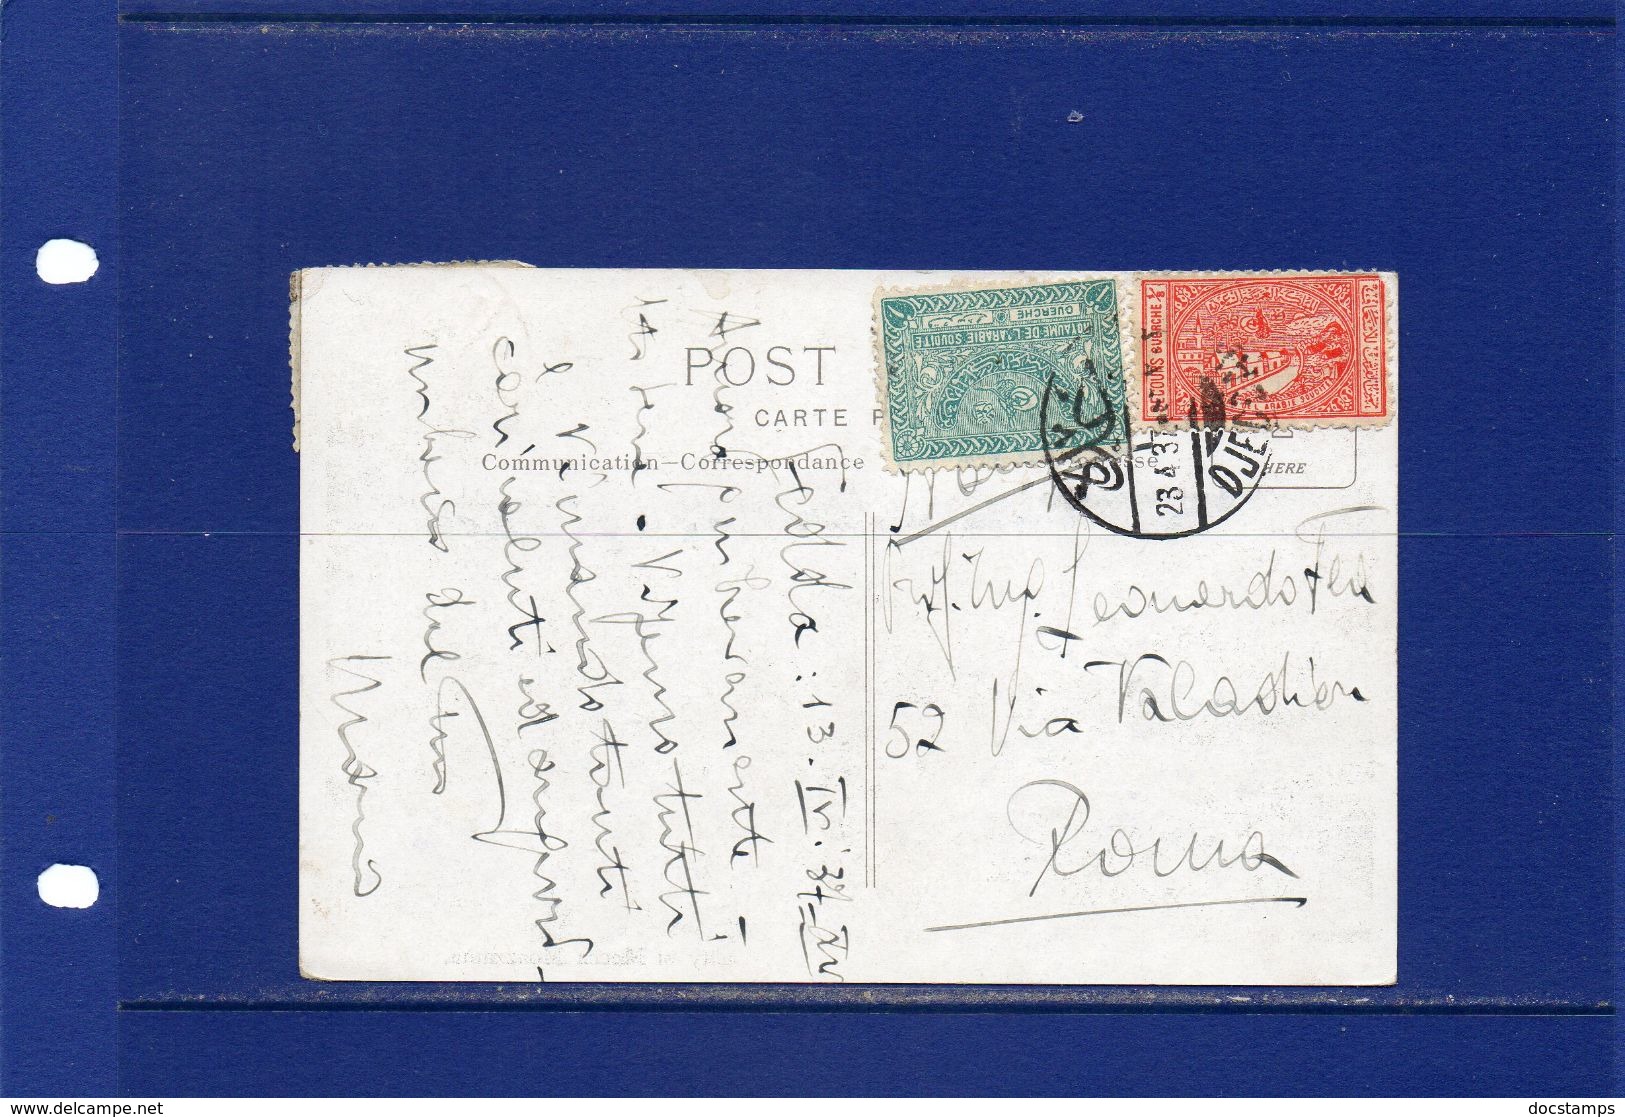 ##POSTCARDS-Saudi Arabia -1937 - City Of Mecca Moazzama  With View Of Holy QUABA-  Sent To  Italy - Good  Postage - Arabia Saudita